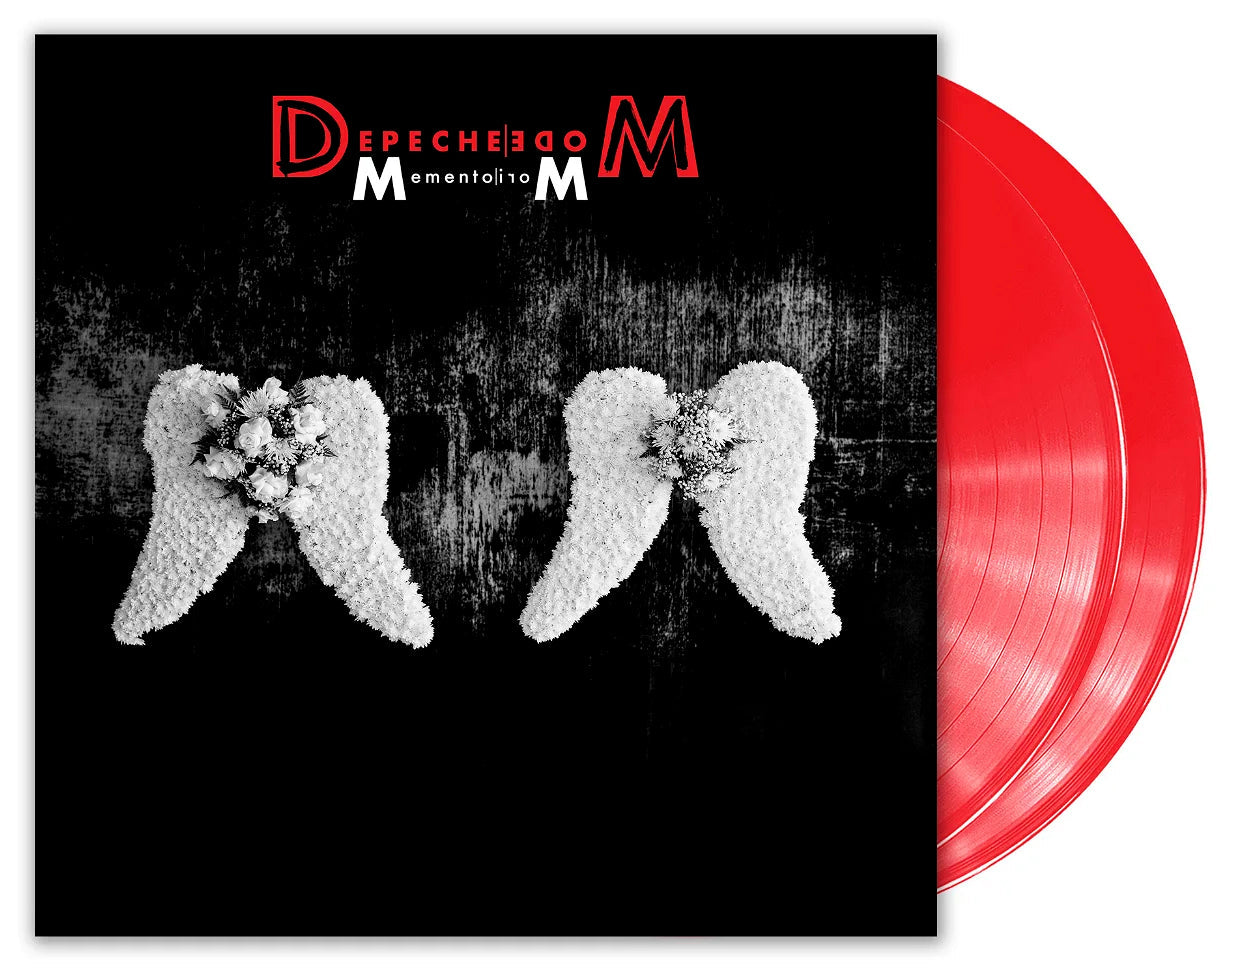 Depeche Mode Memento Mori Limited Red Vinyl LP